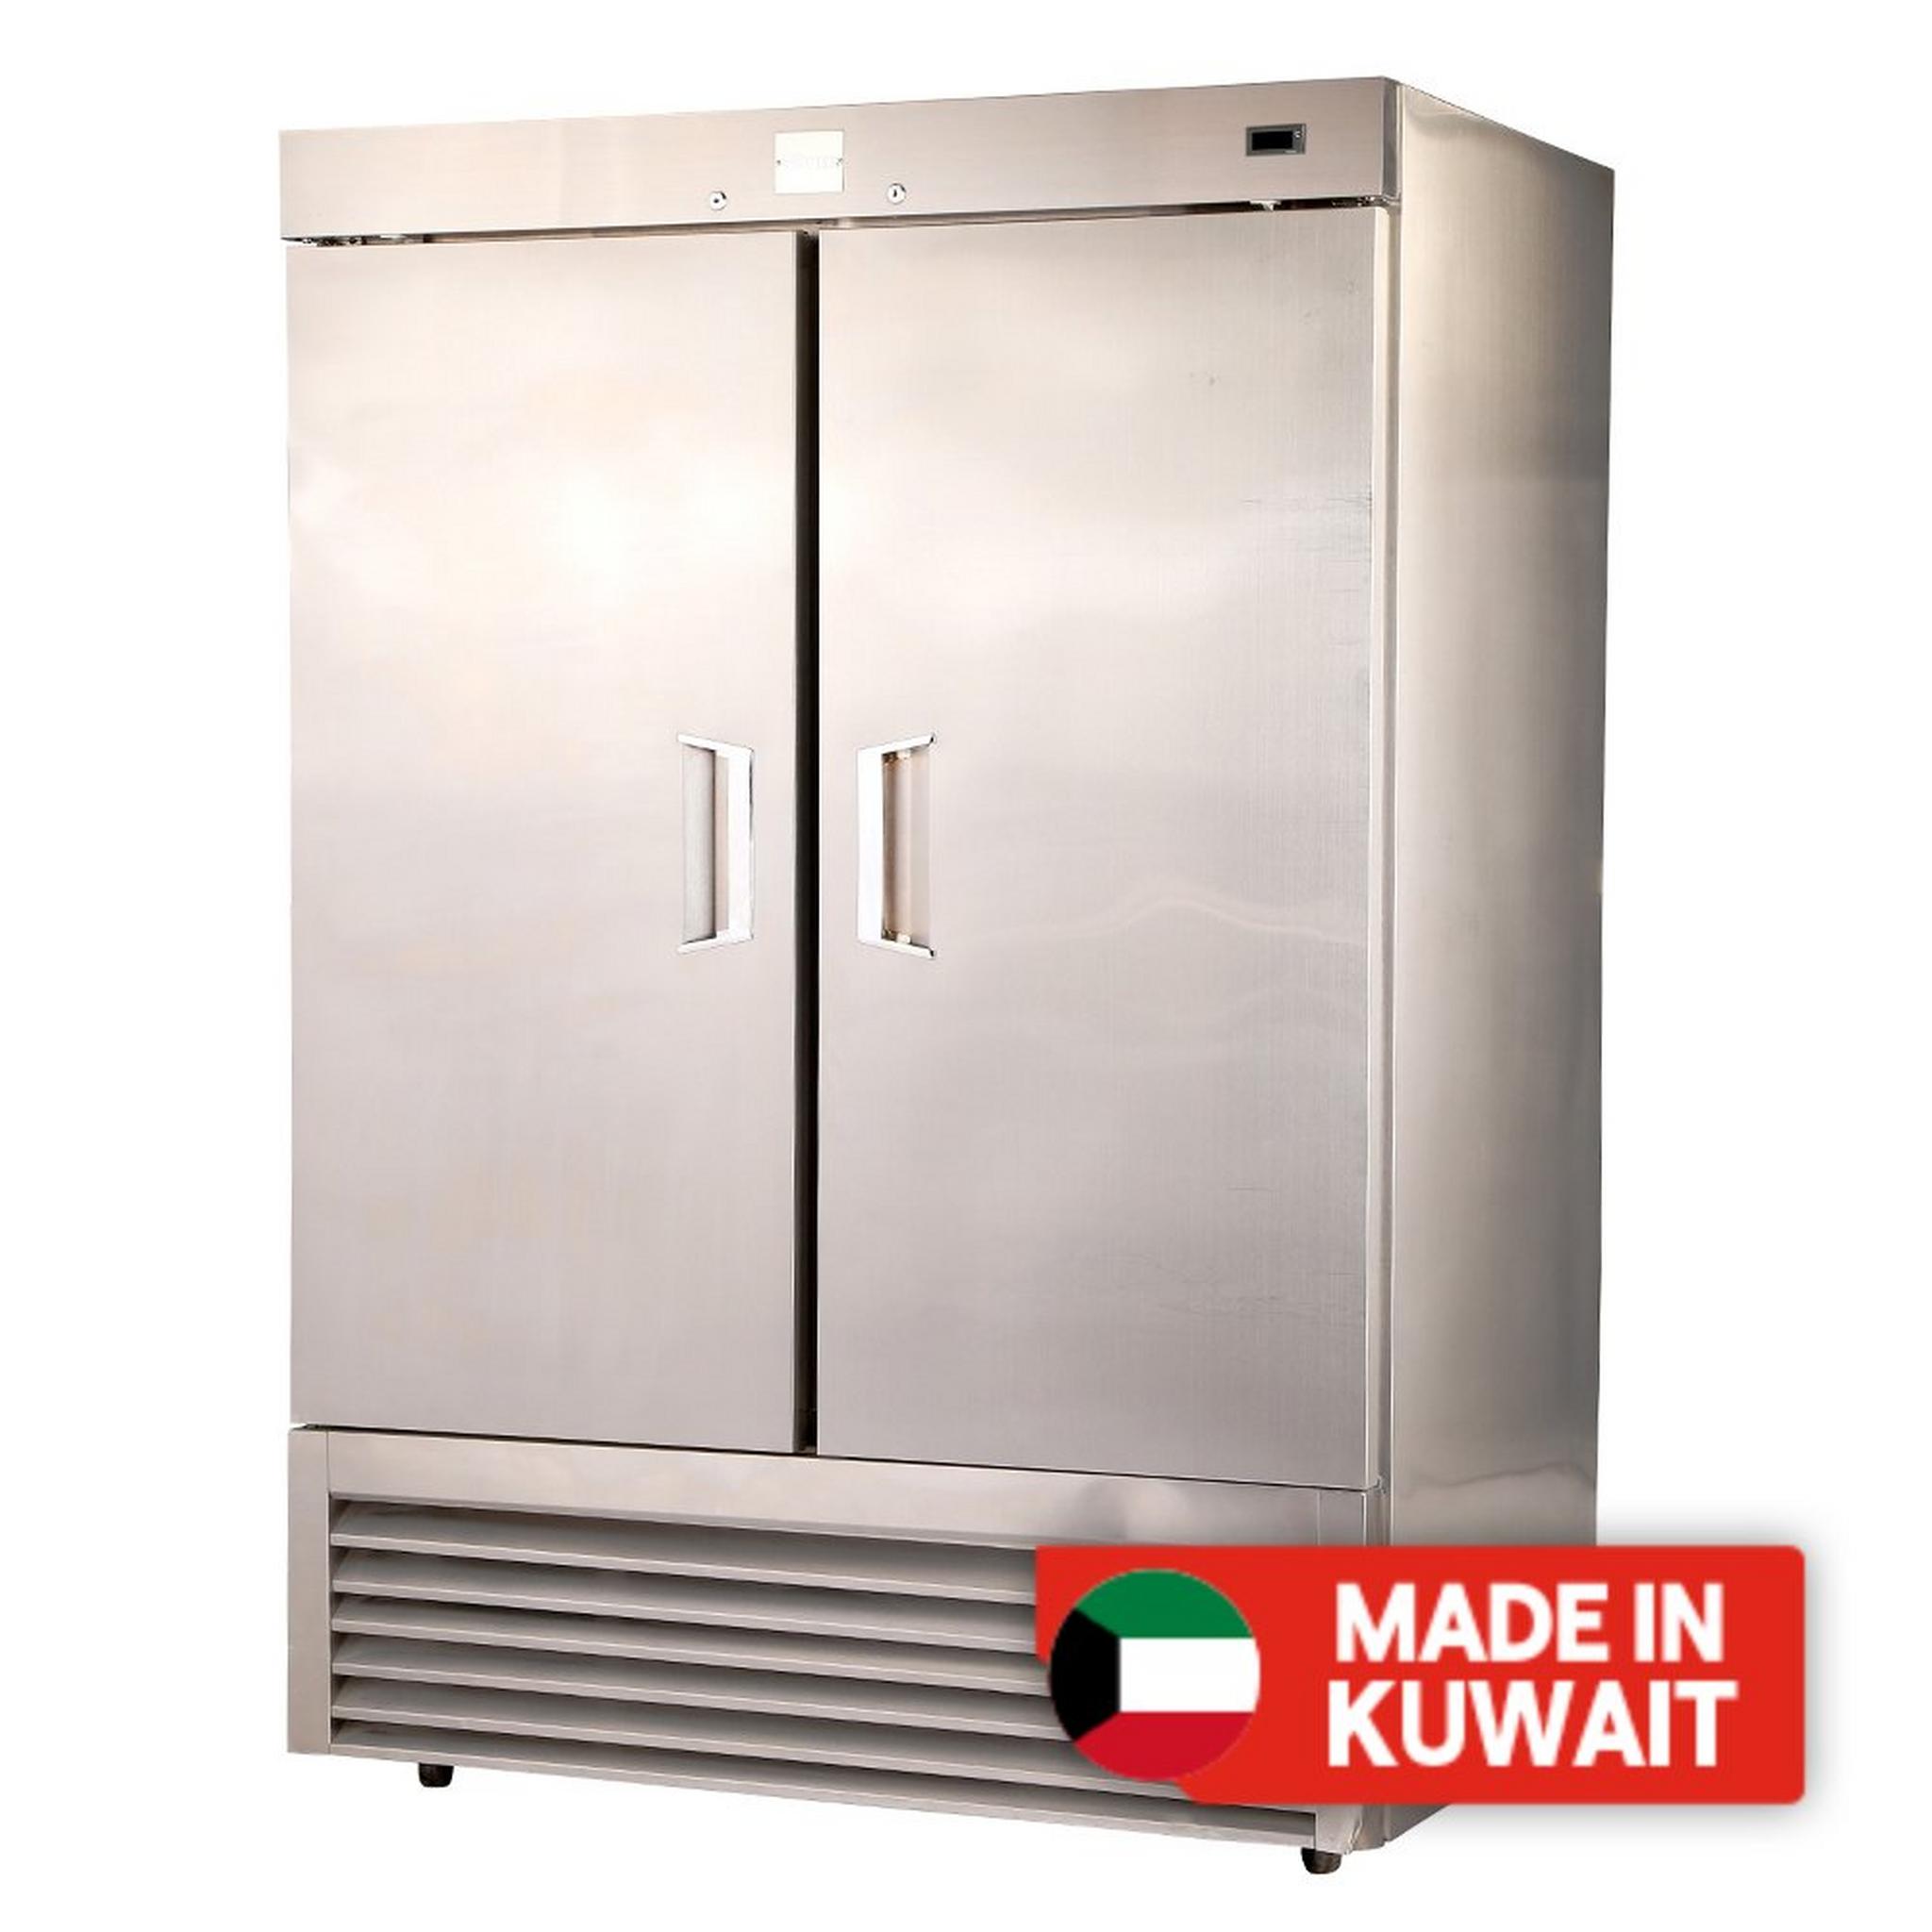 Wansa 46 Cft. Double Door Refrigerator (2DRS) - Stainless Steel